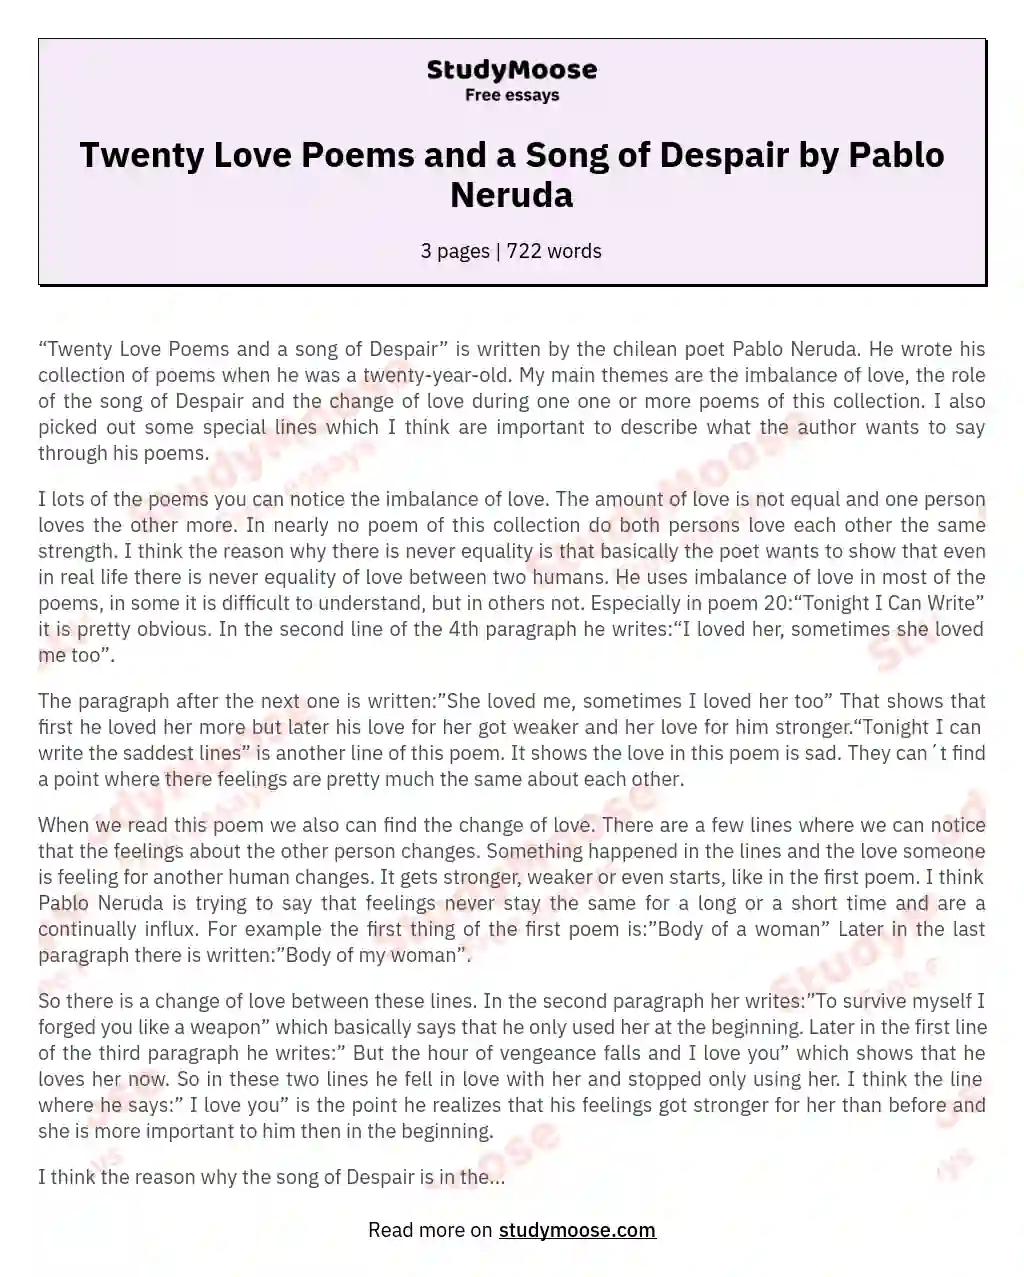 Twenty Love Poems and a Song of Despair by Pablo Neruda essay